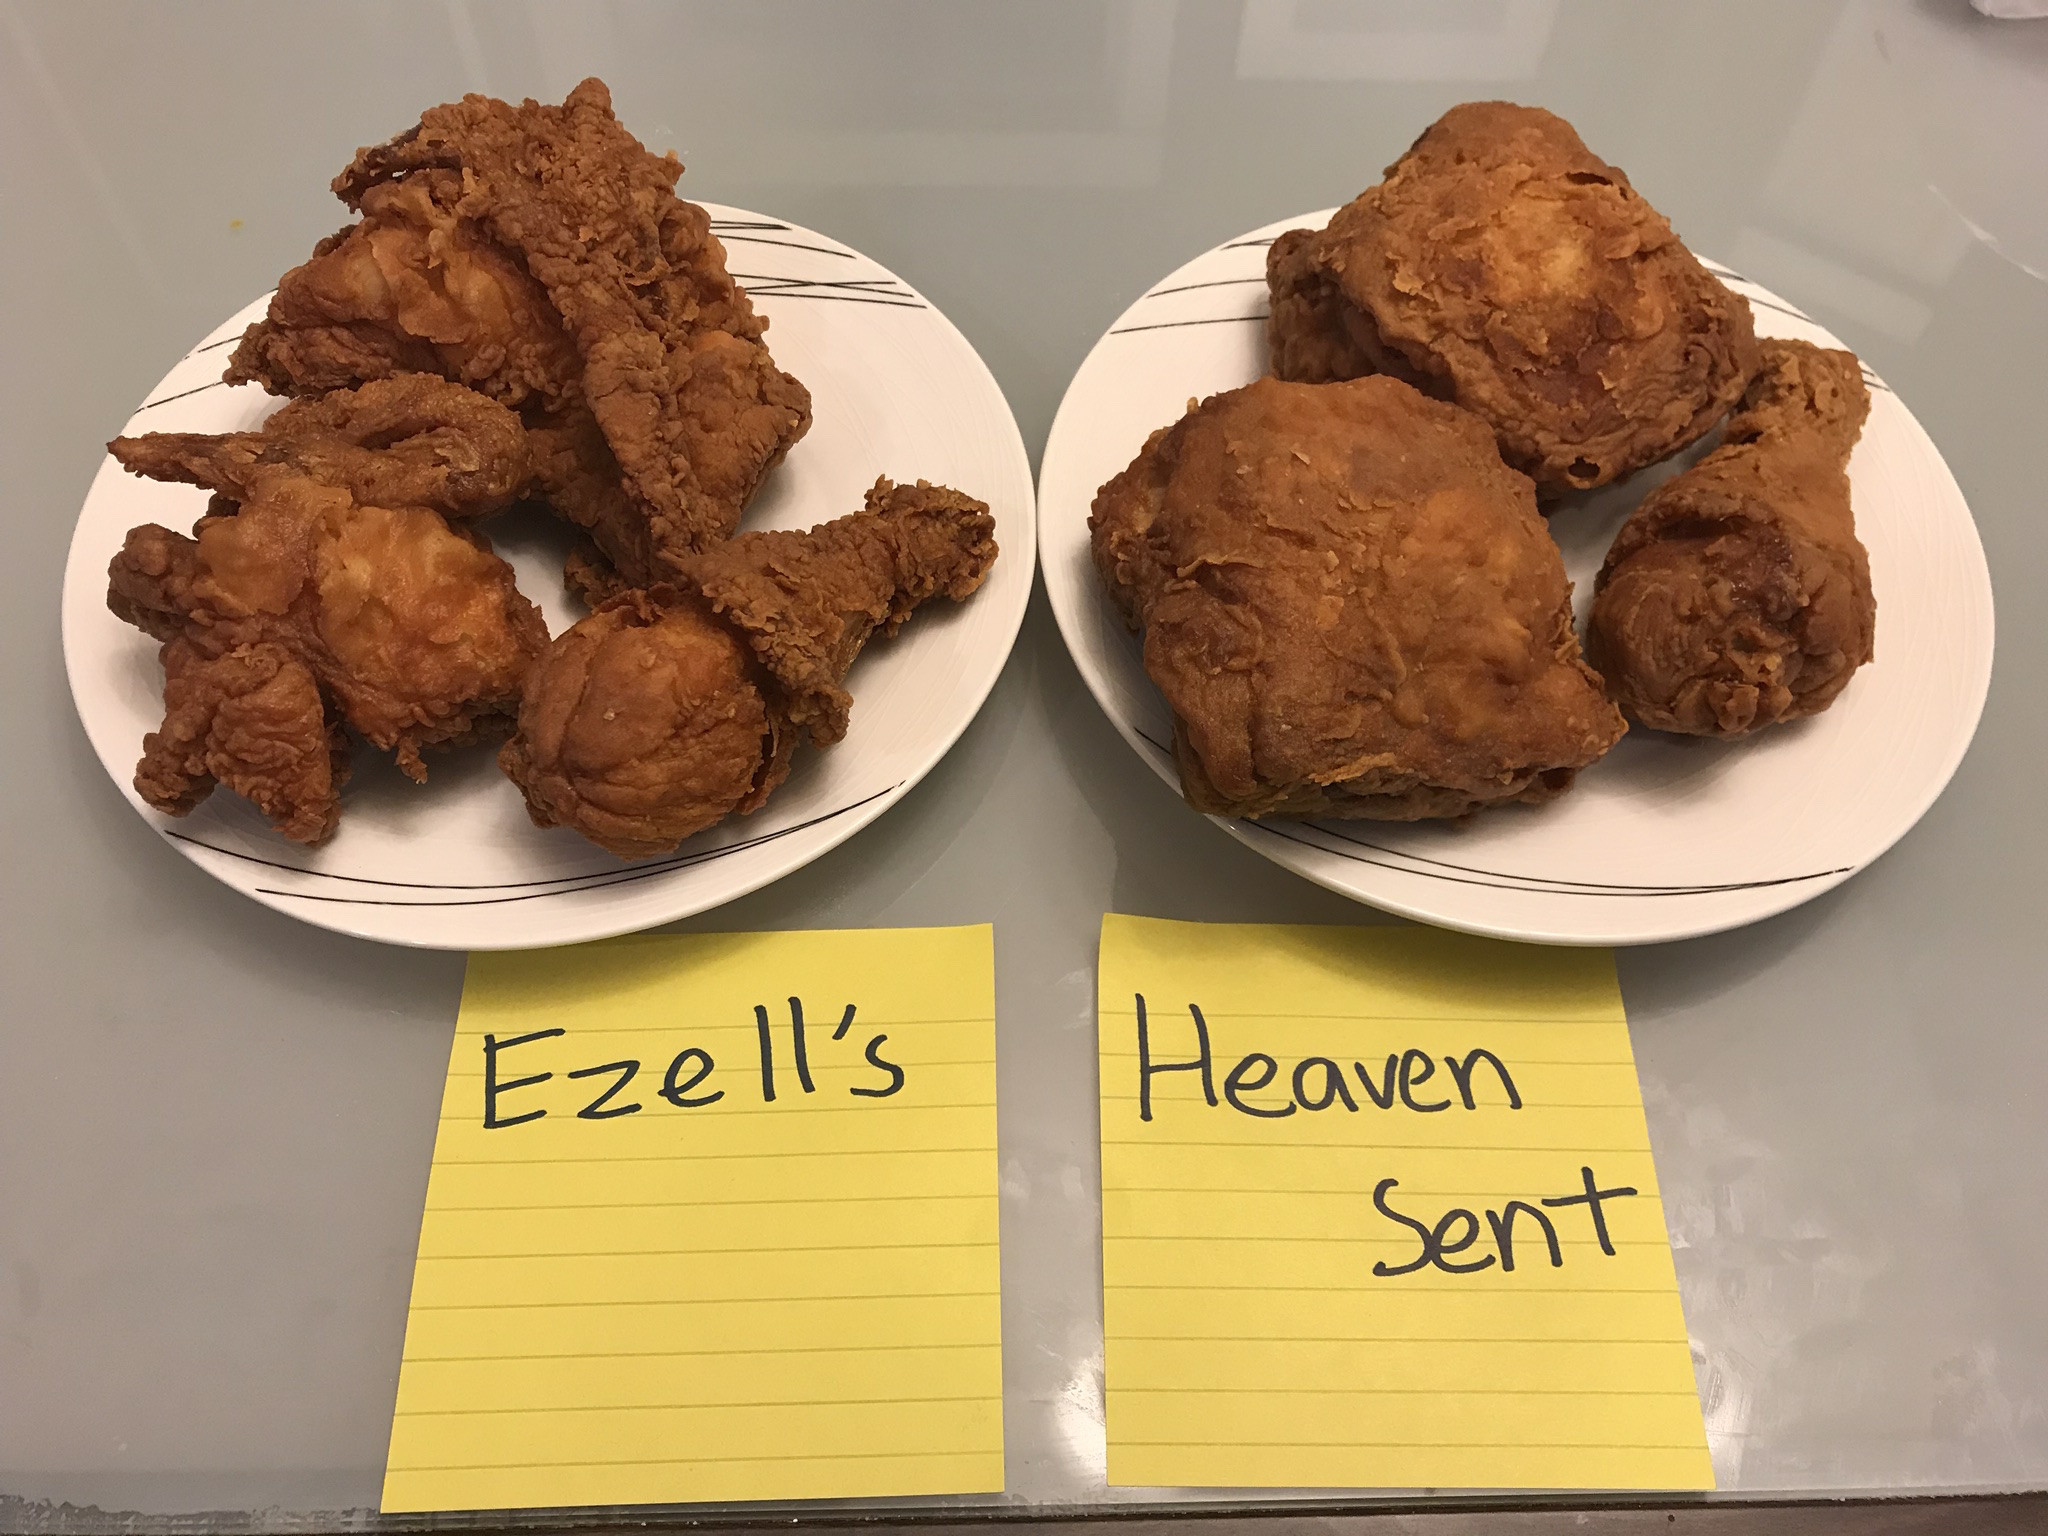 Heaven Sent Fried Chicken
 Ezell s vs Heaven Sent Battle of Seattle s Best Fried